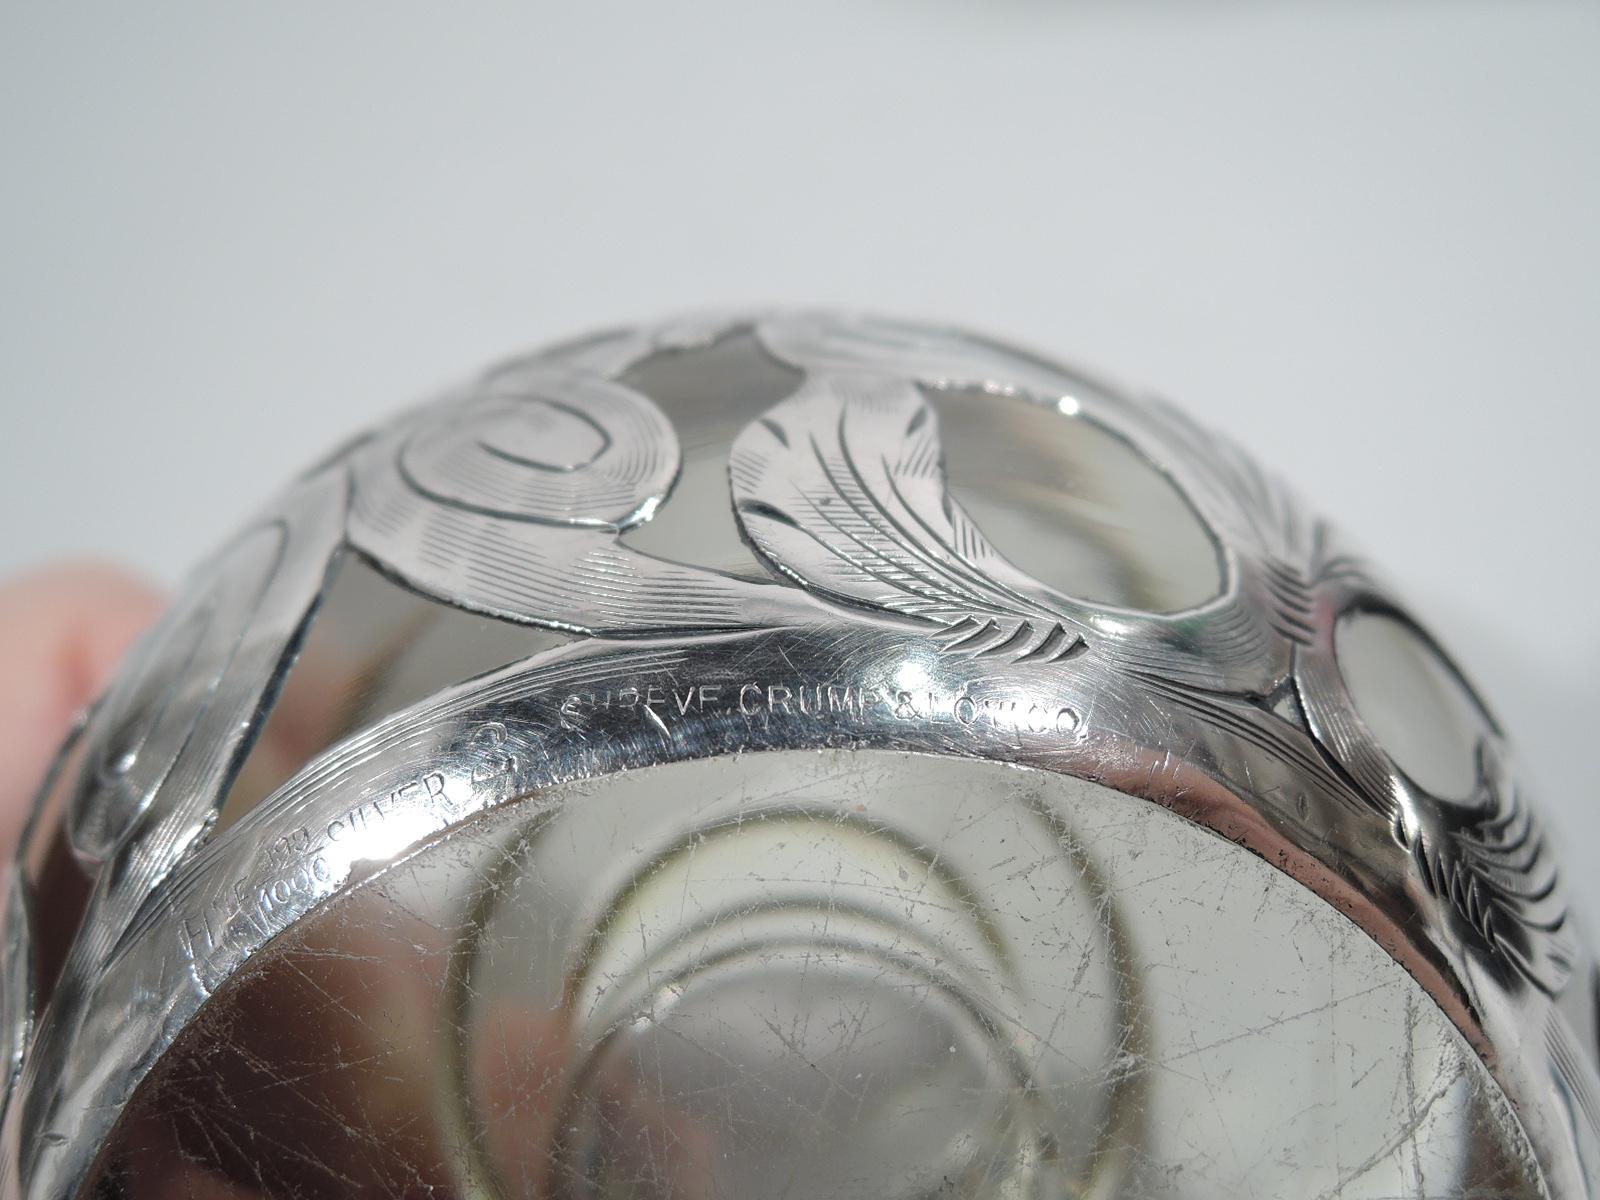 Shreve, Crump & Low Art Nouveau Silver Overlay Globular Inkwell 1